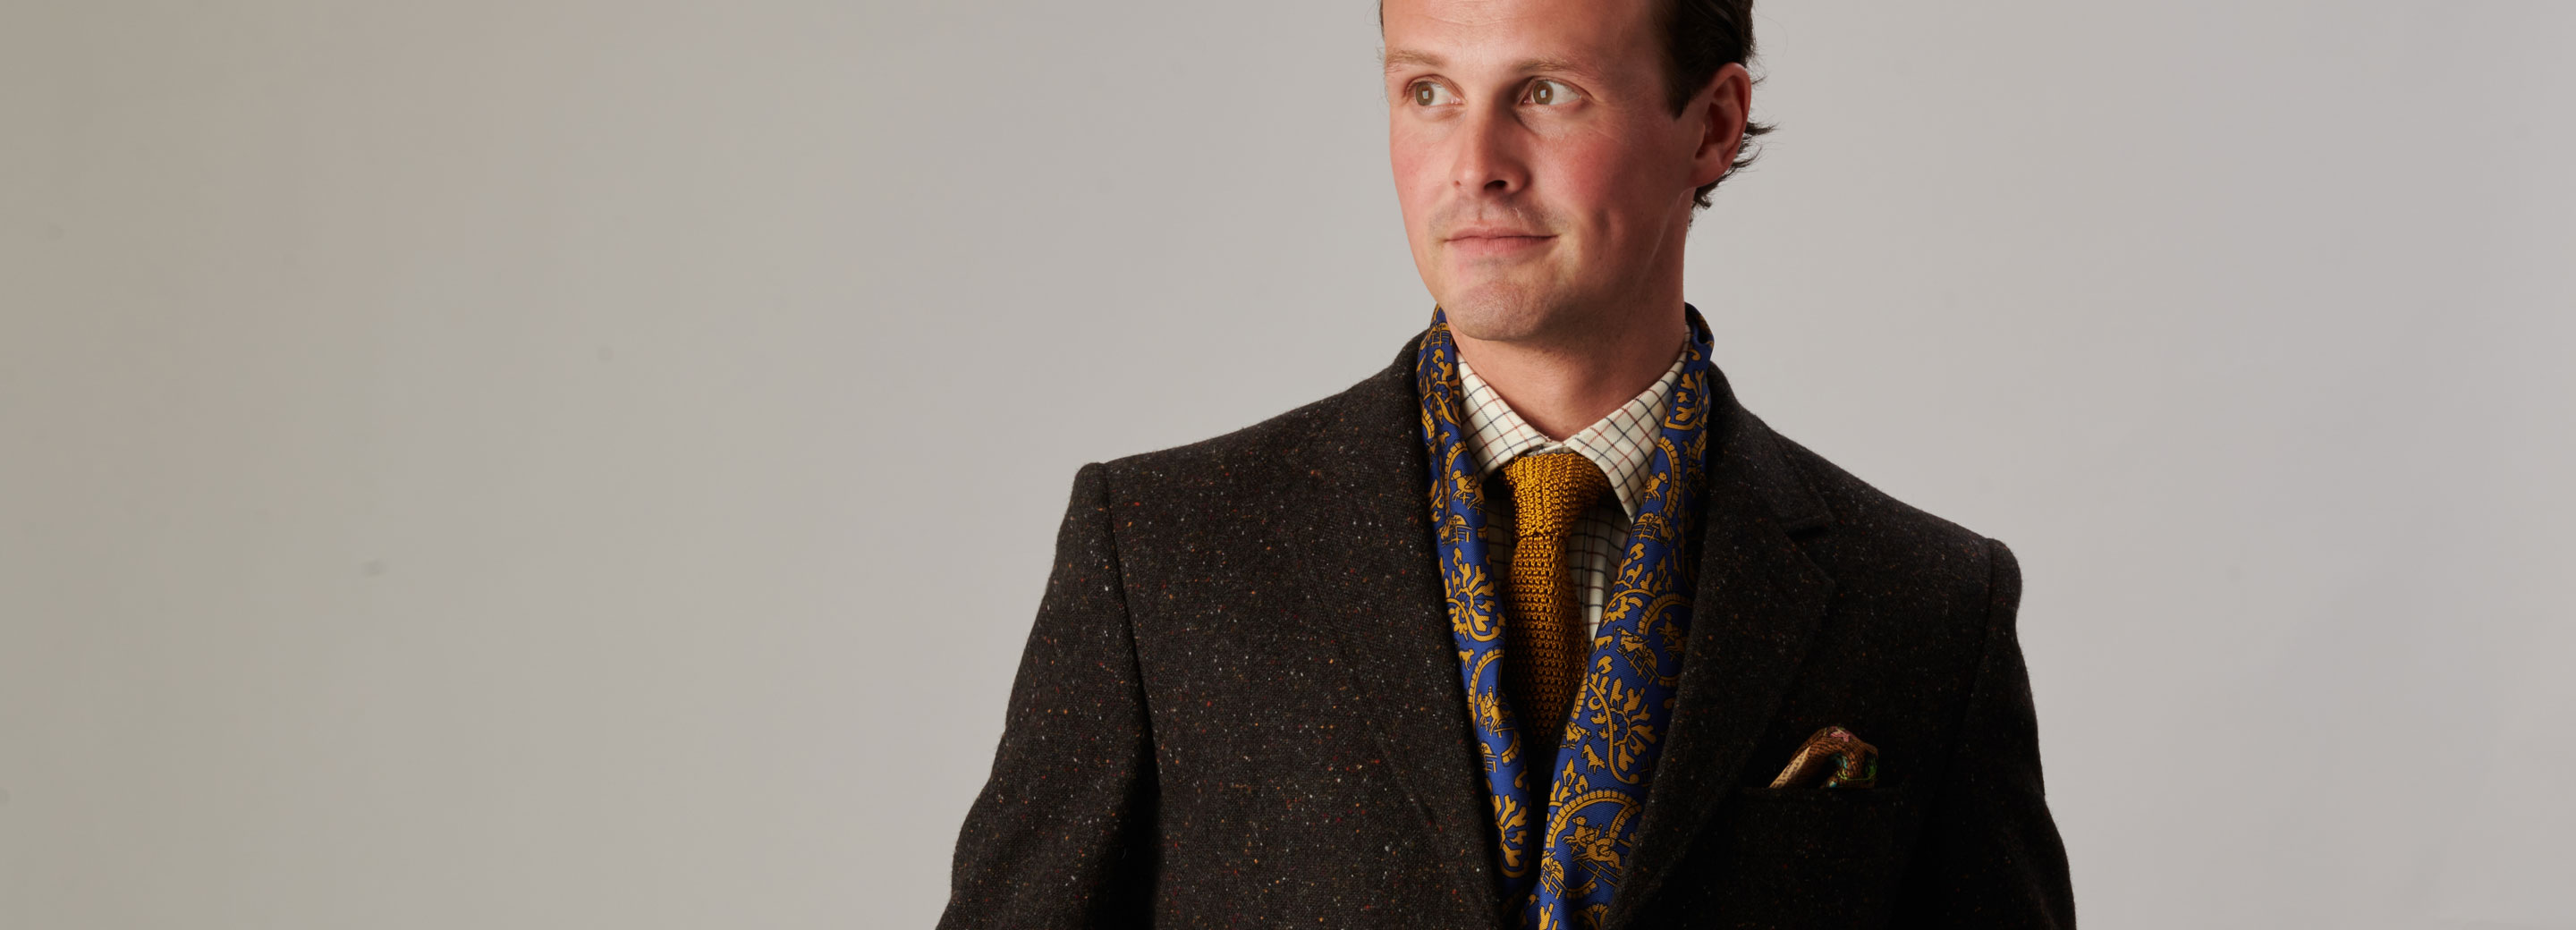 Donegal Tweed Suit